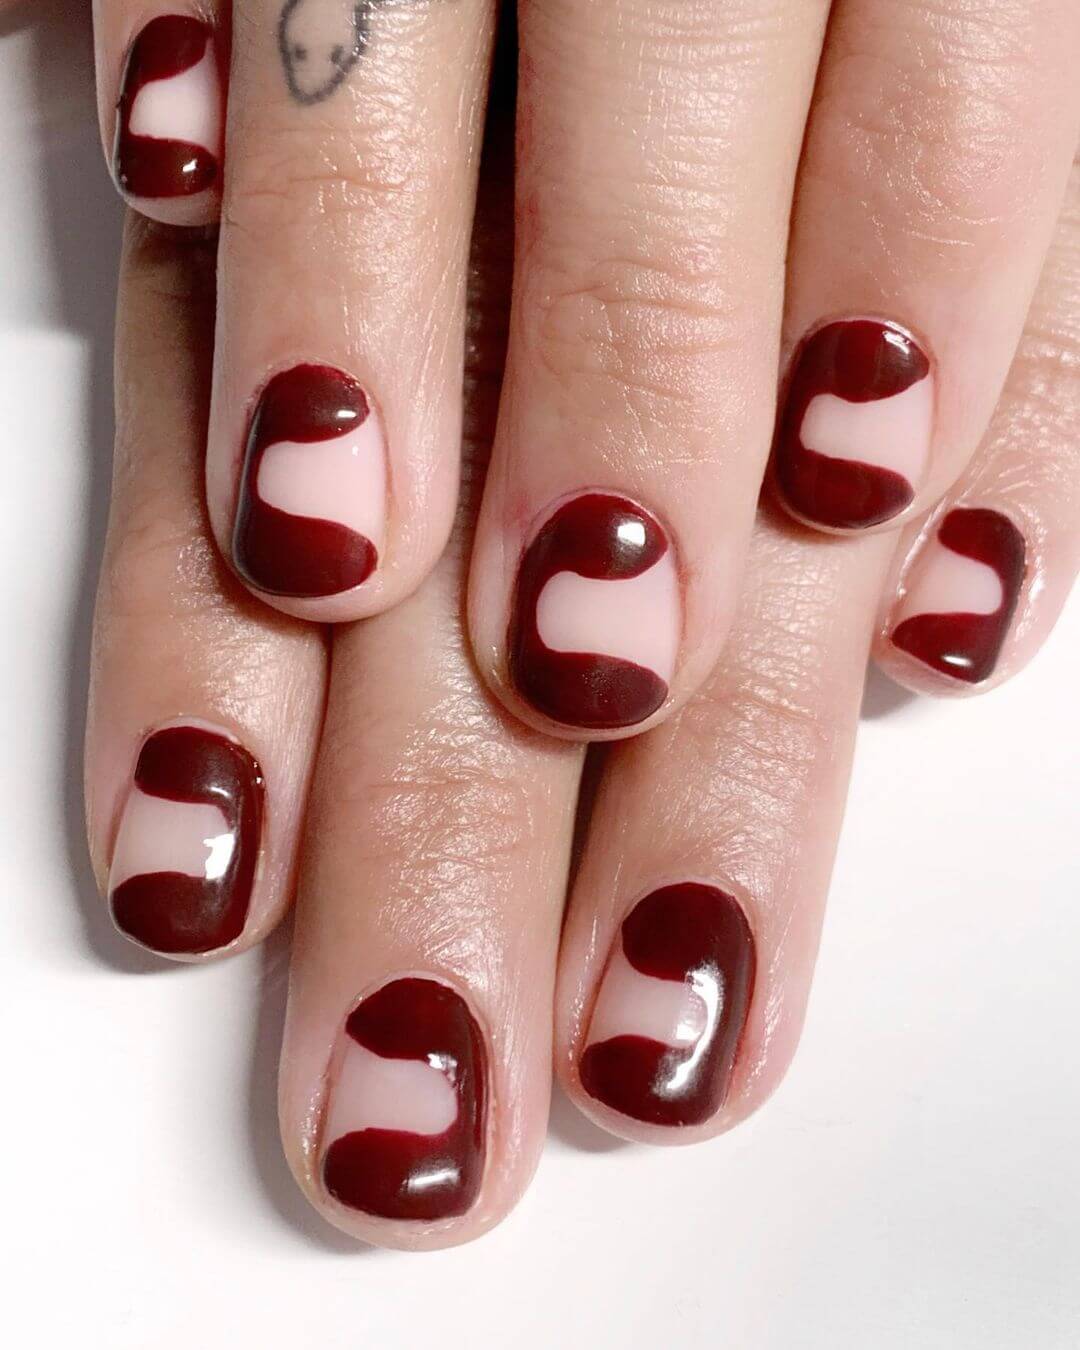 Maroon Nail Art Designs Blood theme maroon nail art design